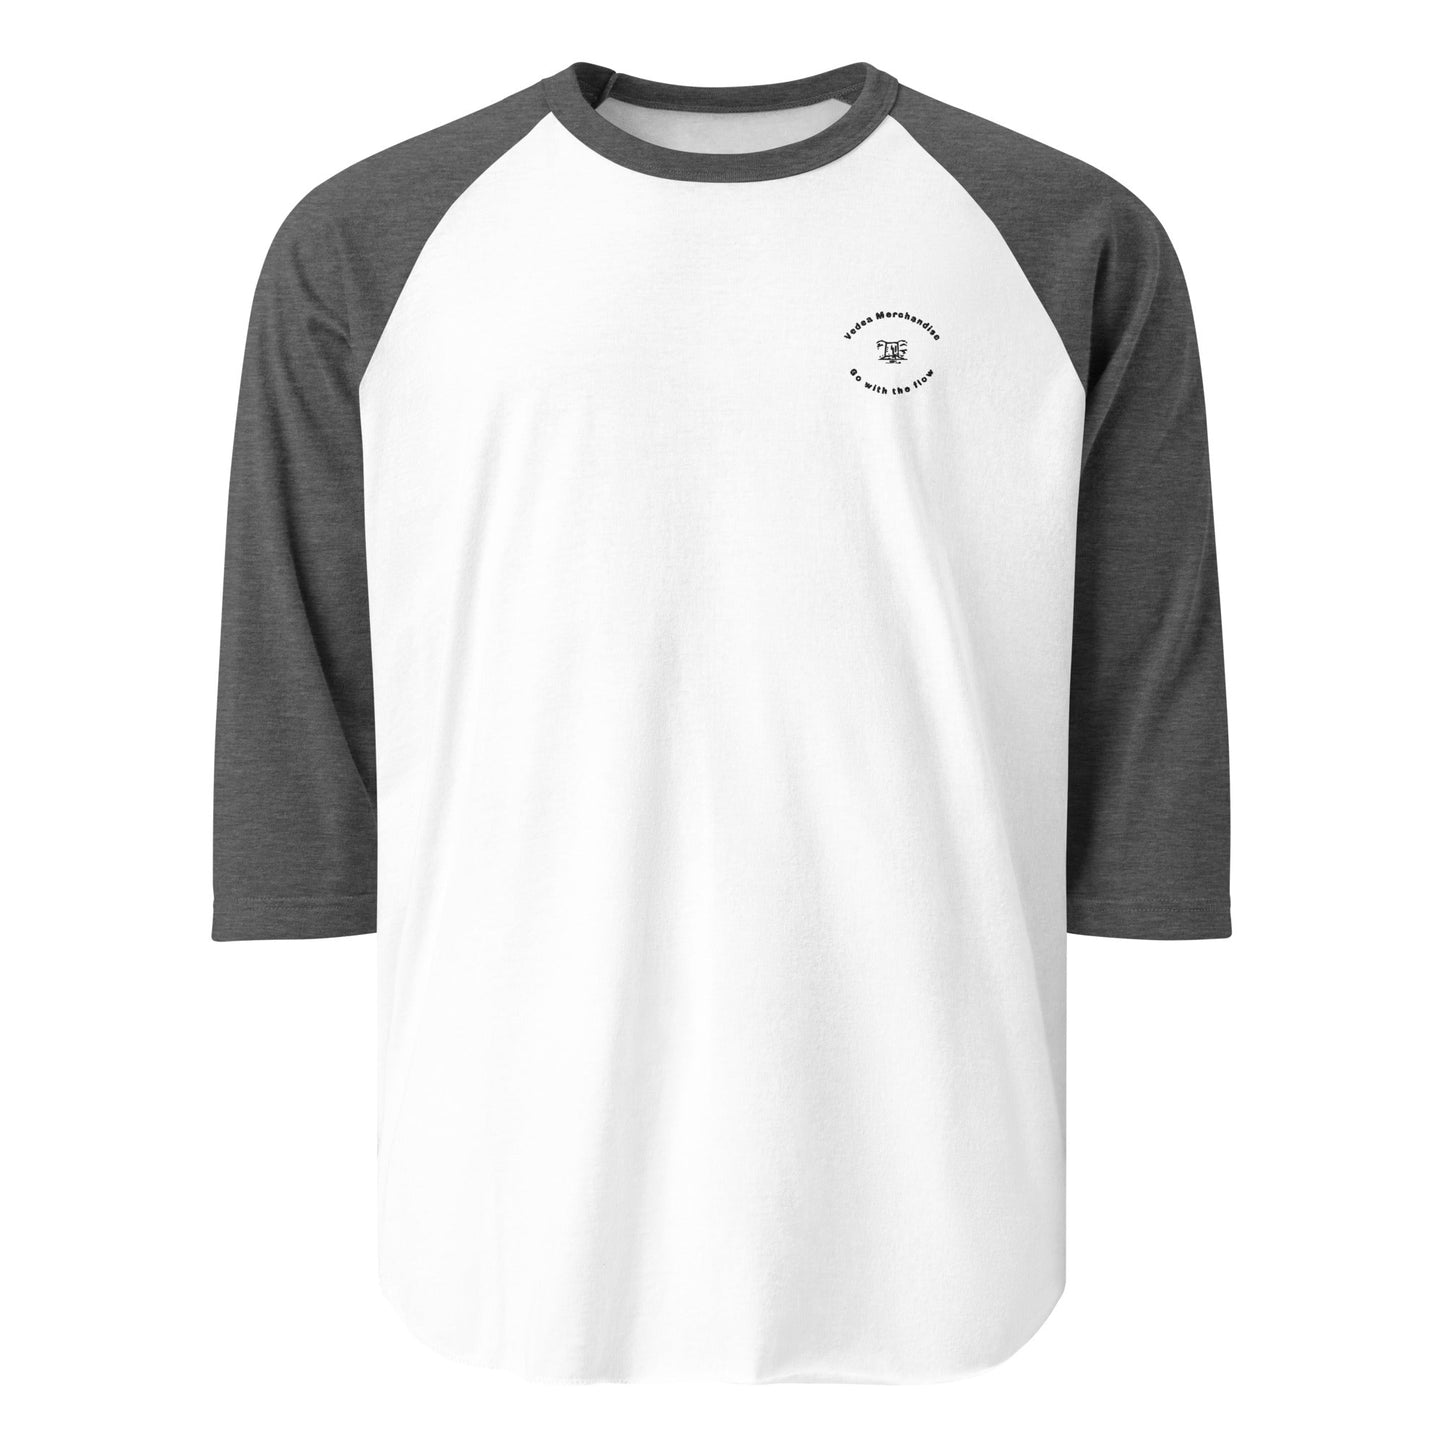 3/4 sleeve raglan shirt - Vedea MerchandiseWhite/Heather CharcoalXS